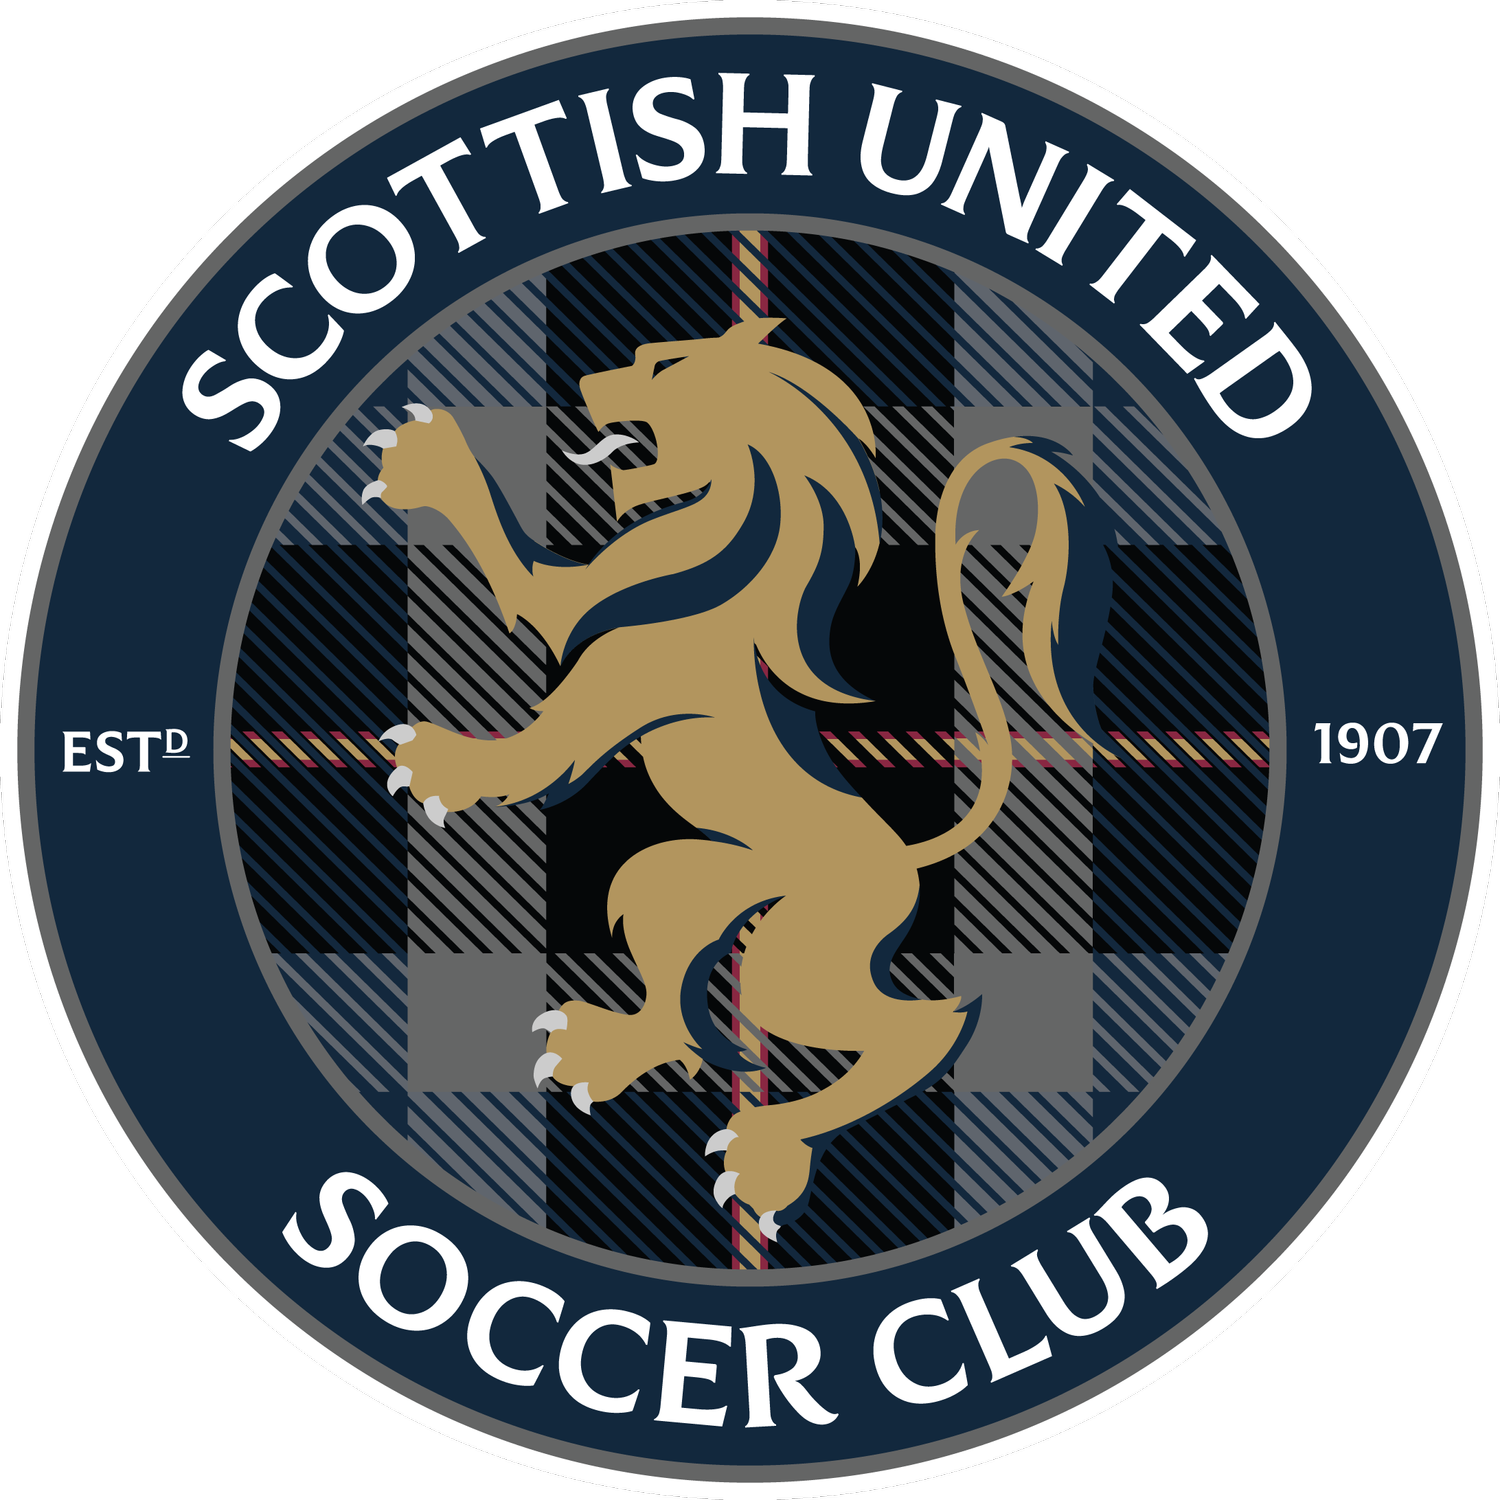 Edmonton Scottish United Soccer Club